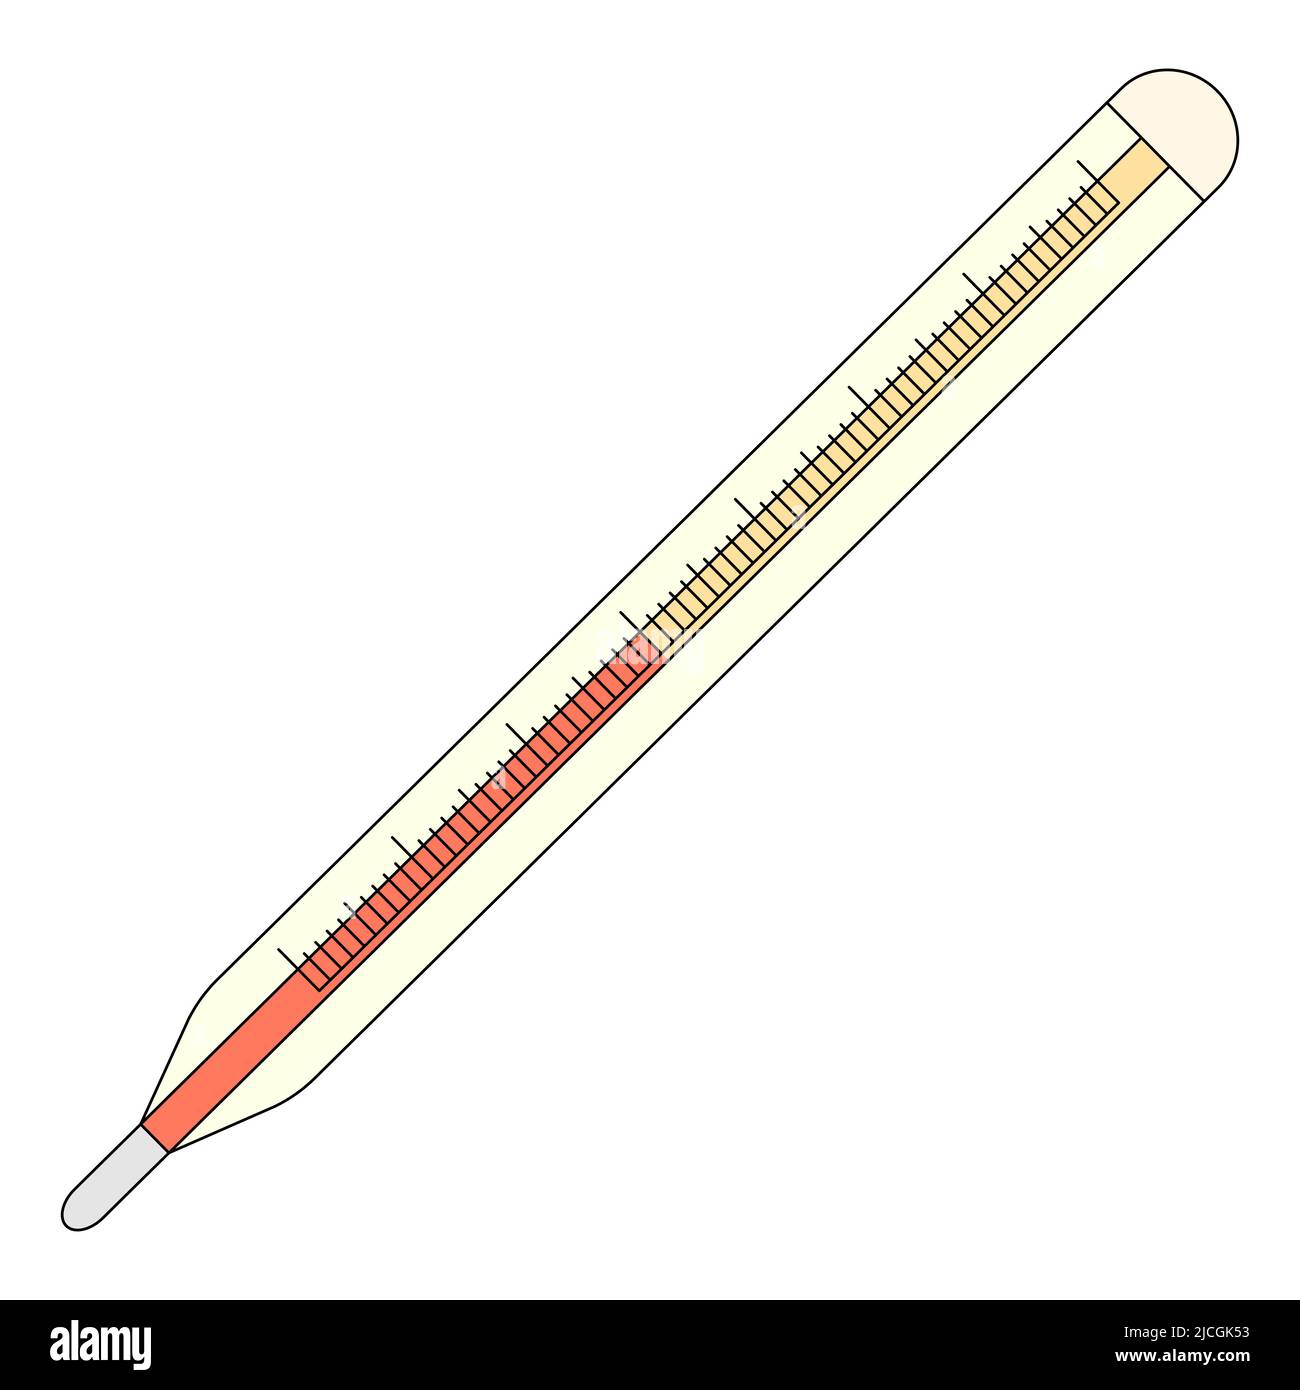 Thermometer vektor vektoren -Fotos und -Bildmaterial in hoher